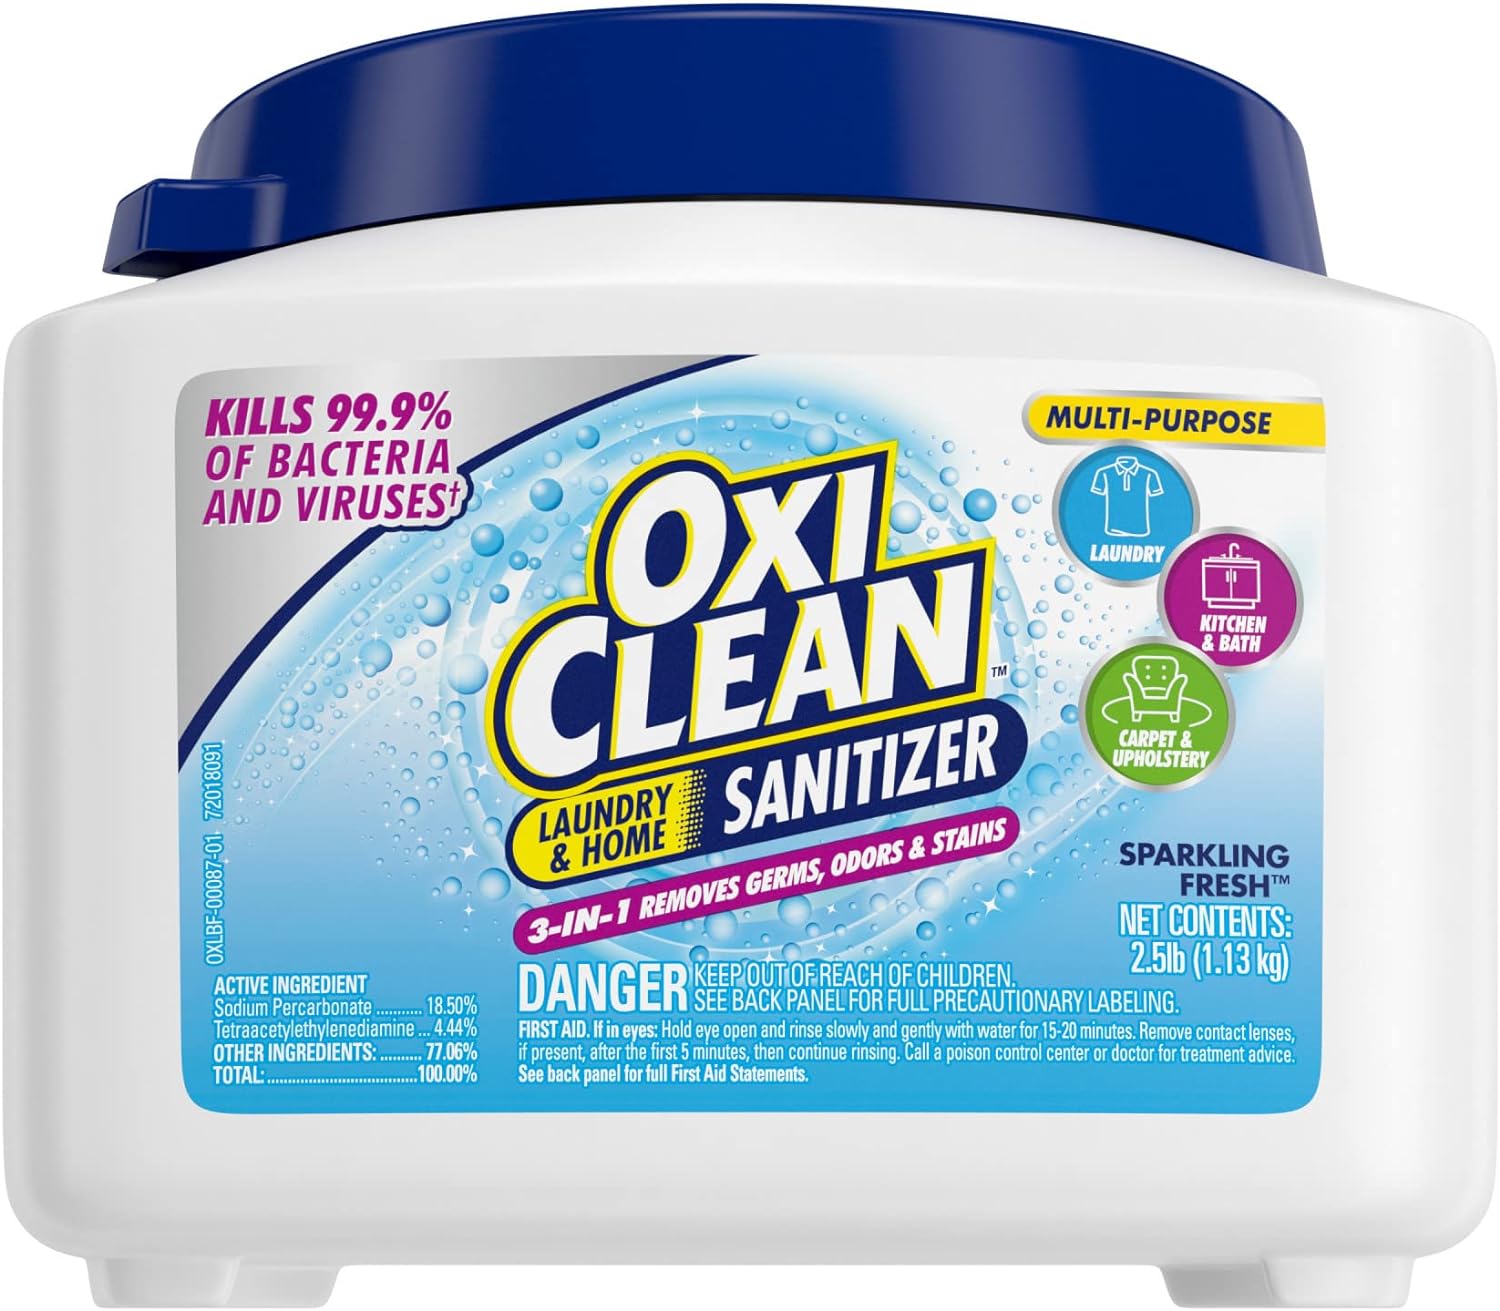 2.5-Lb OxiClean Powder Sanitizer $5.50 w/ S&S + Free Shipping w/ Prime or on $35+